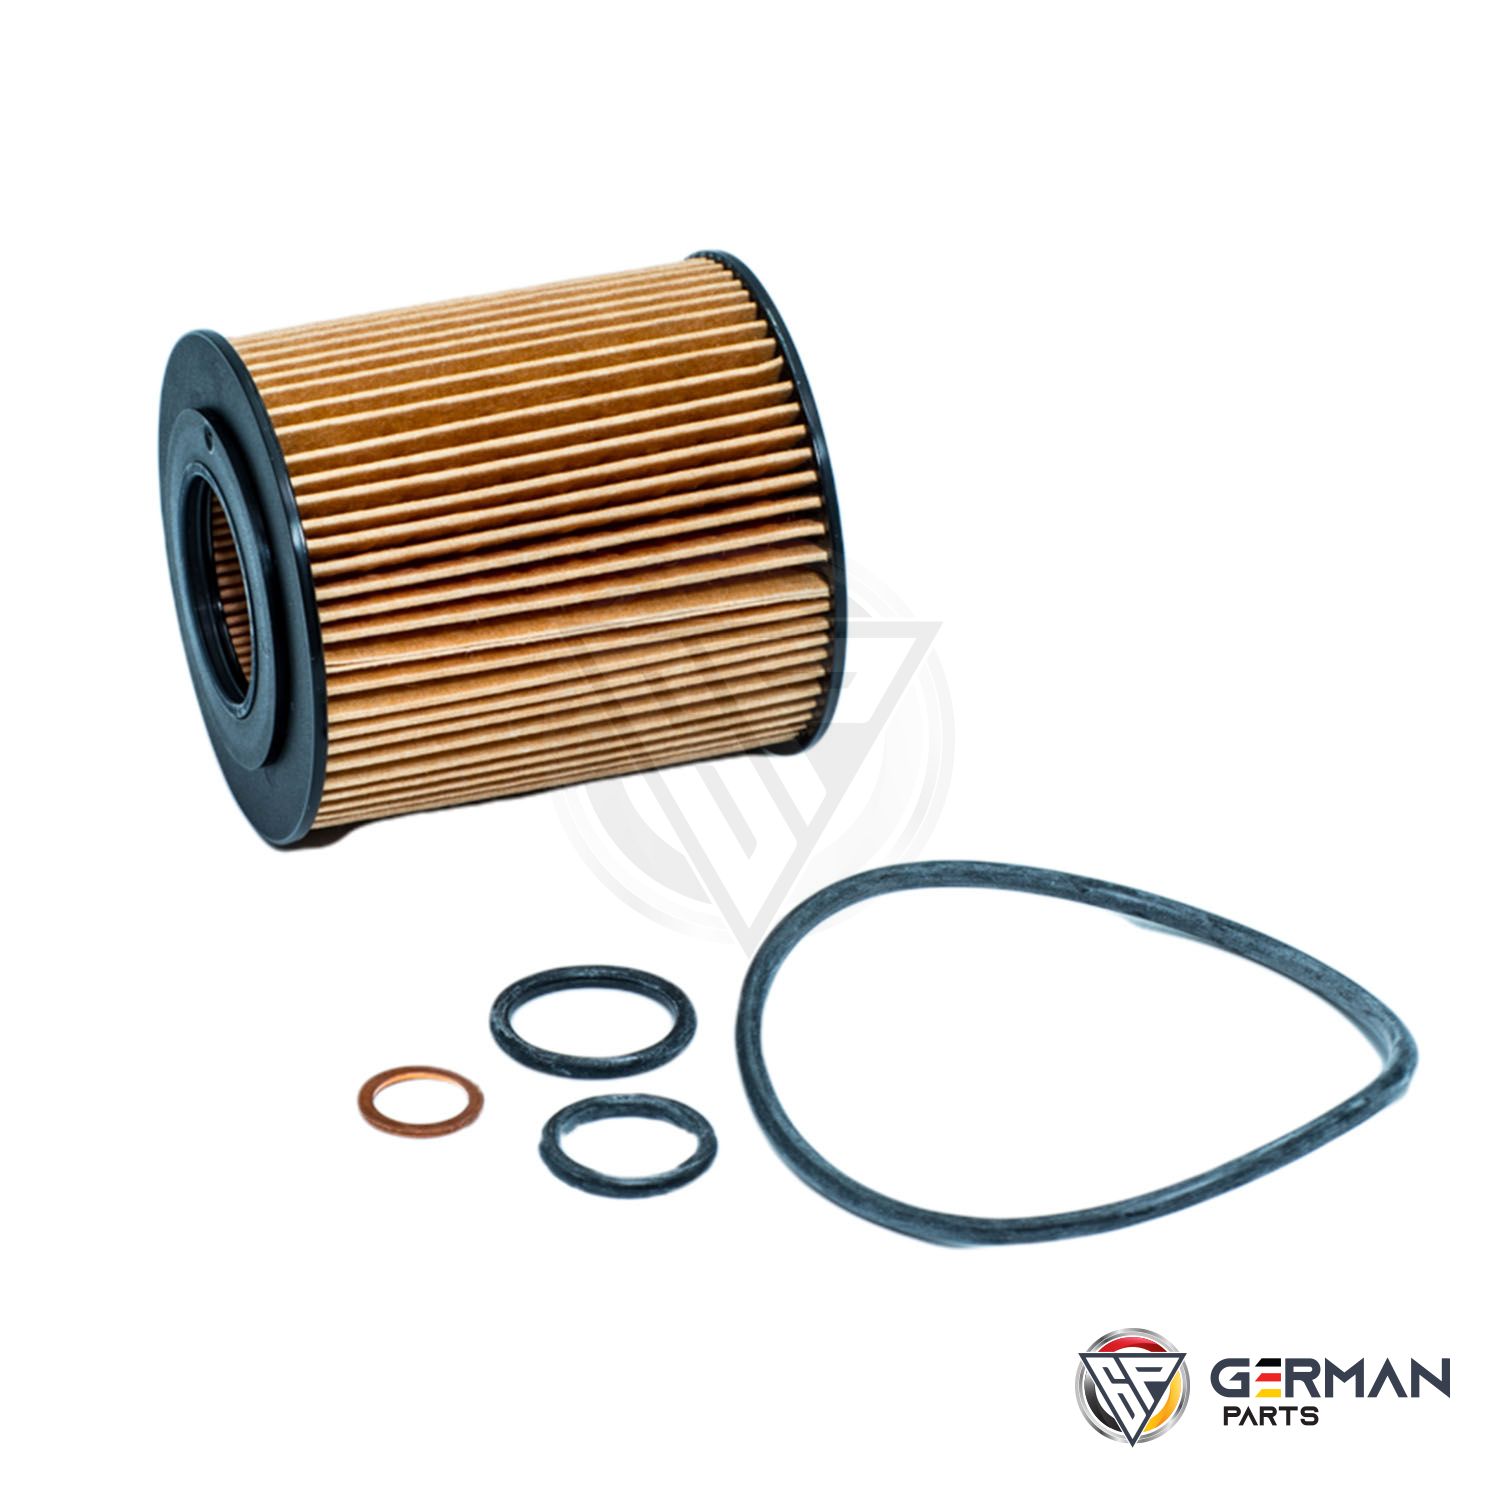 Buy Bosch Oil Filter 11427508969 - German Parts